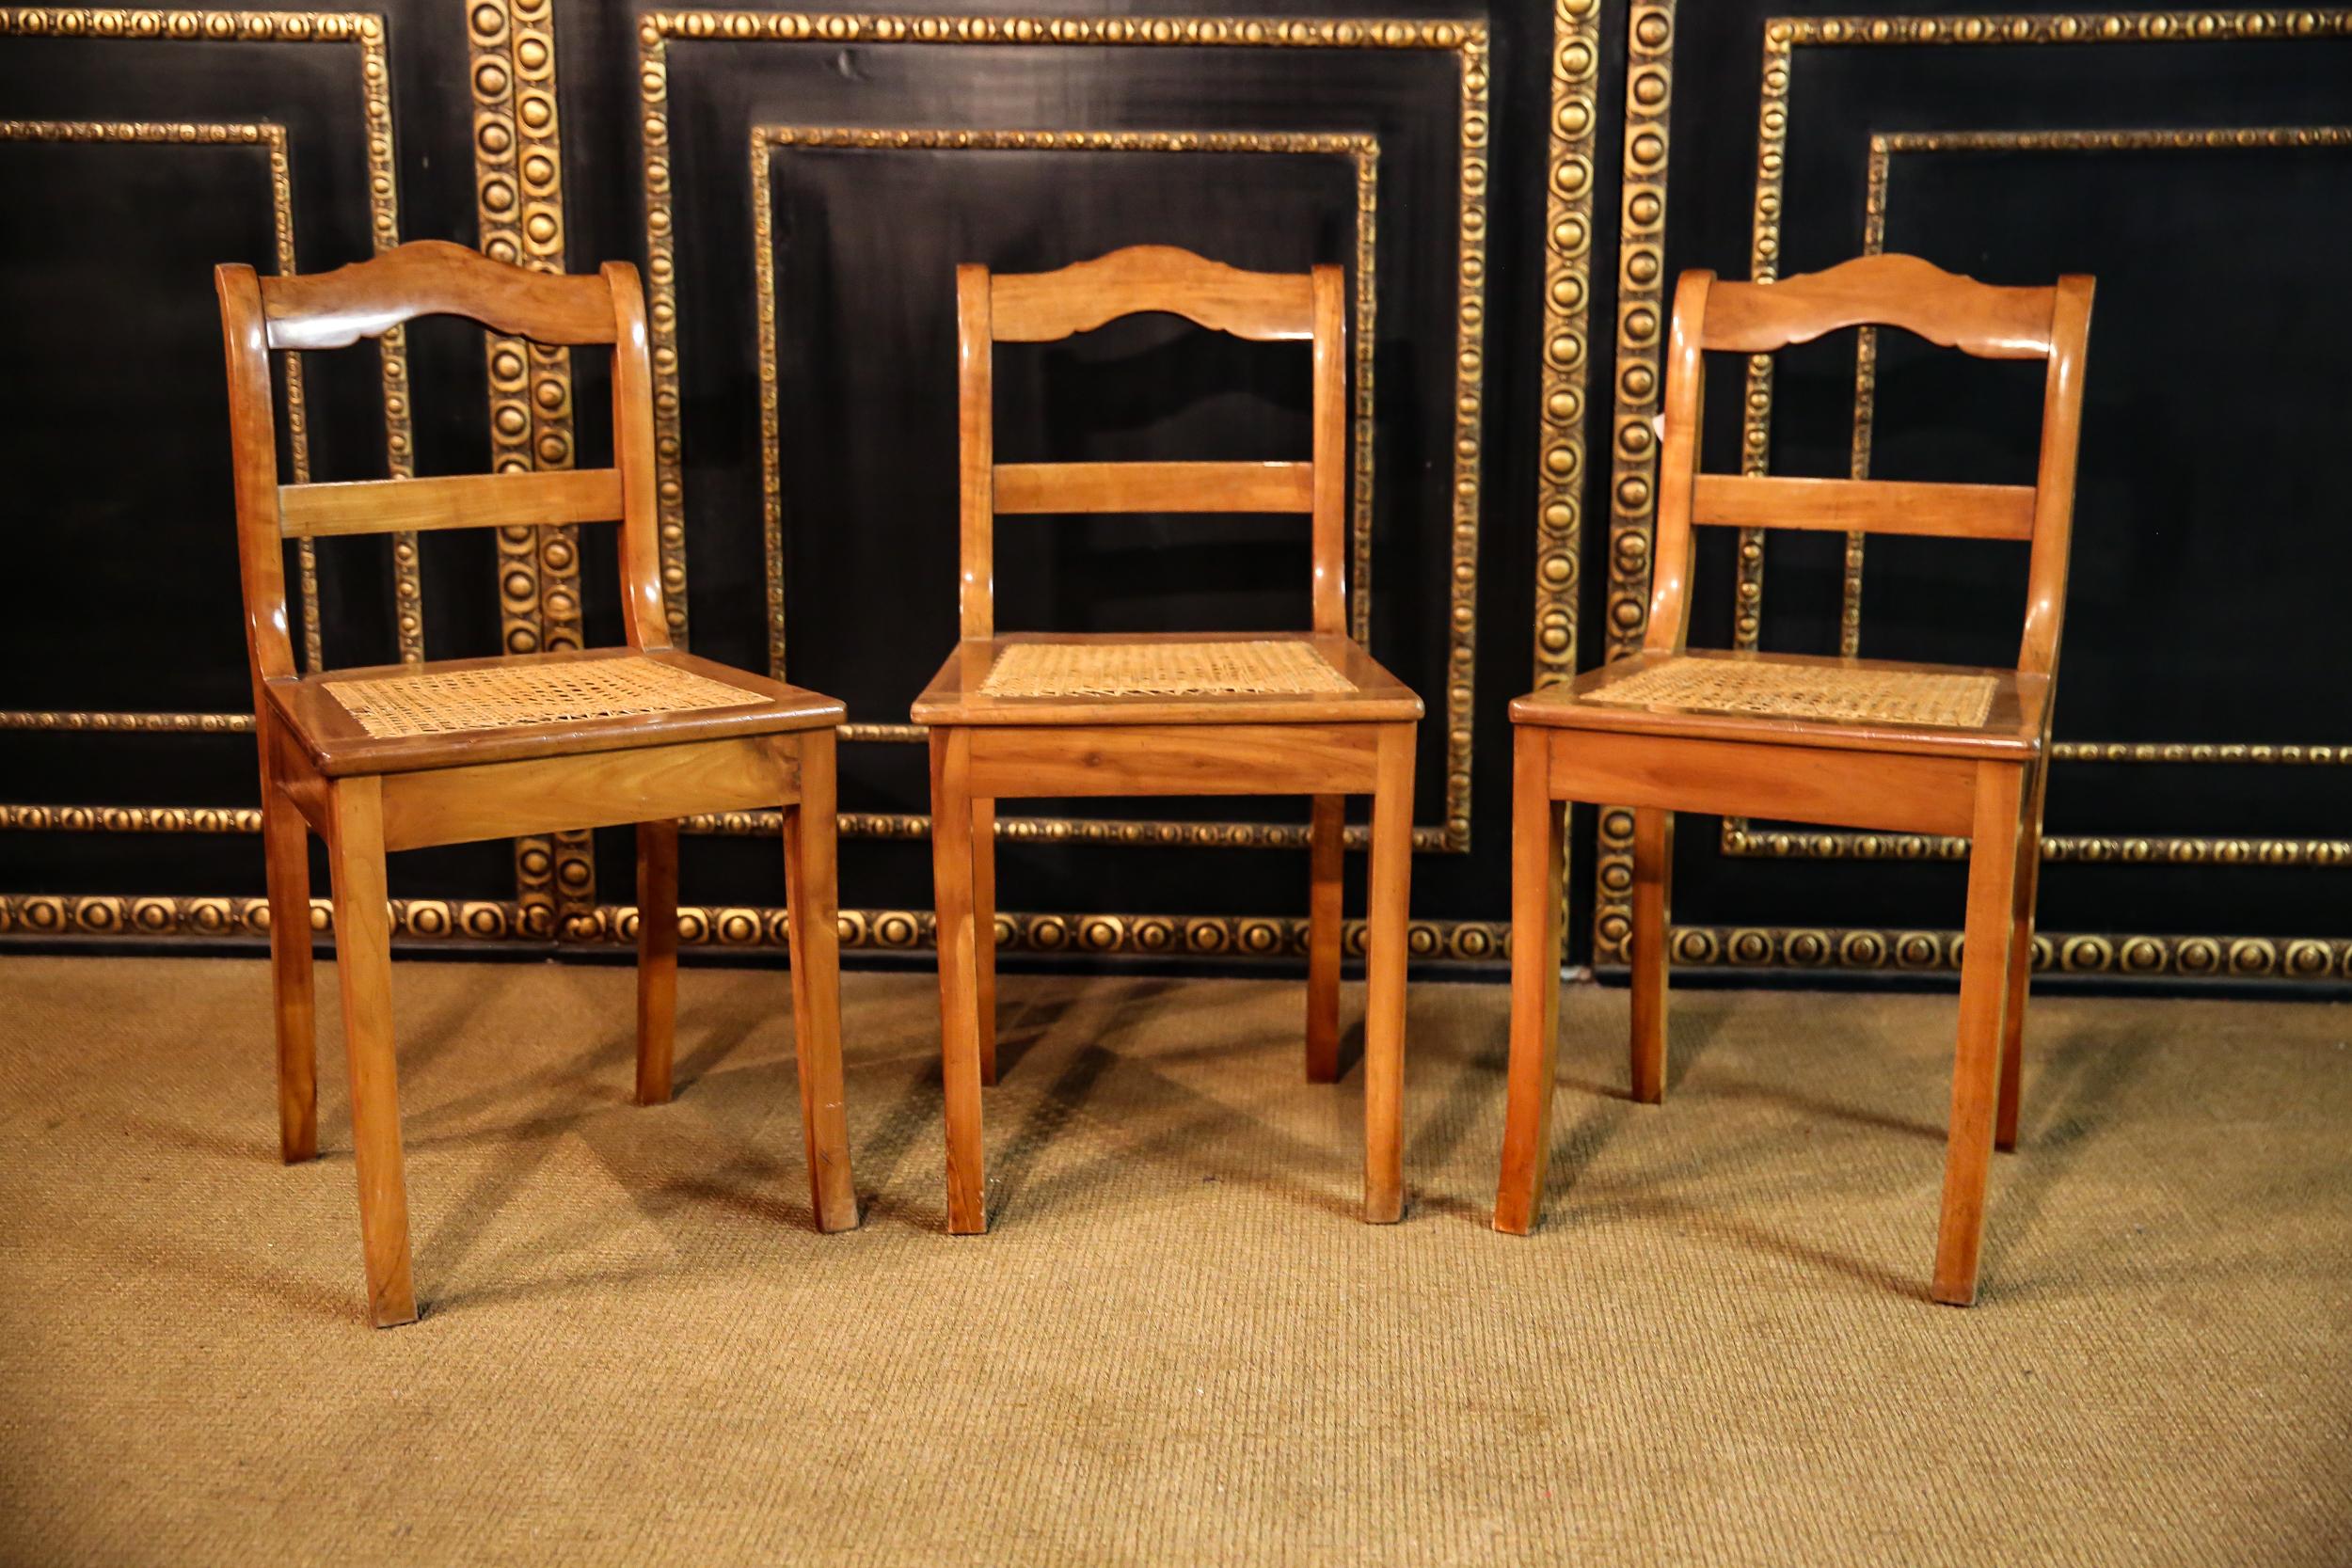 3 rare Biedermeier chairs, circa 1830.

Solid wood with wickerwork.

